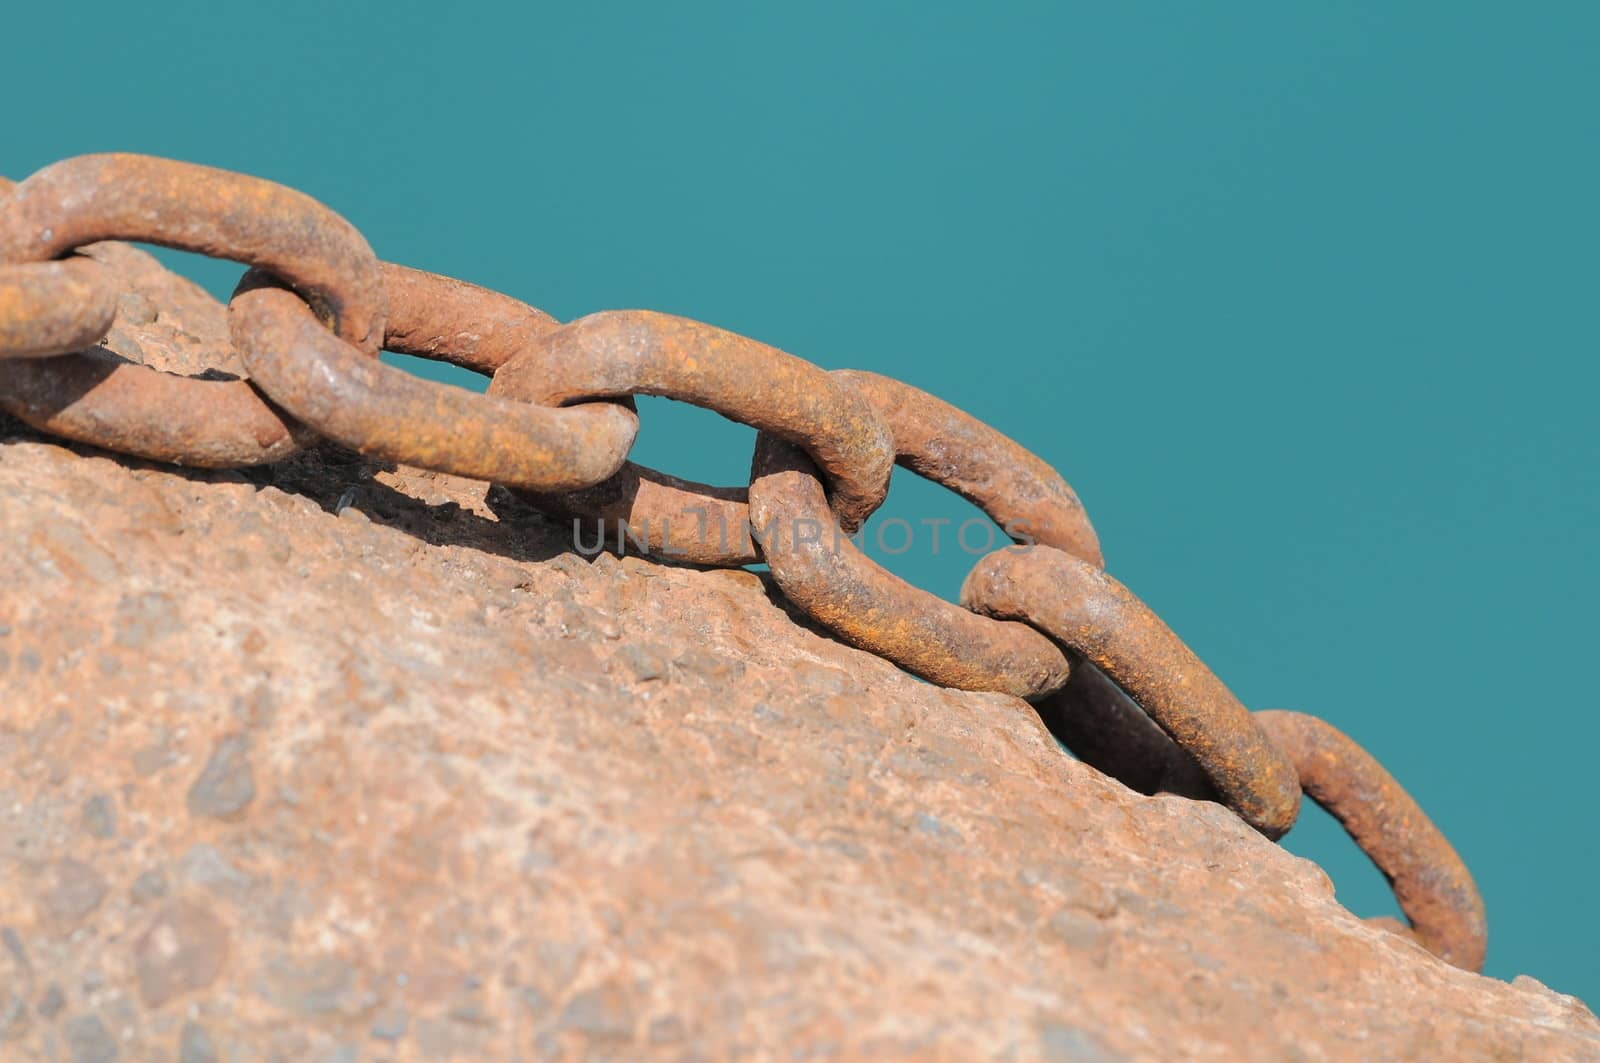 Rusty Chain by underworld